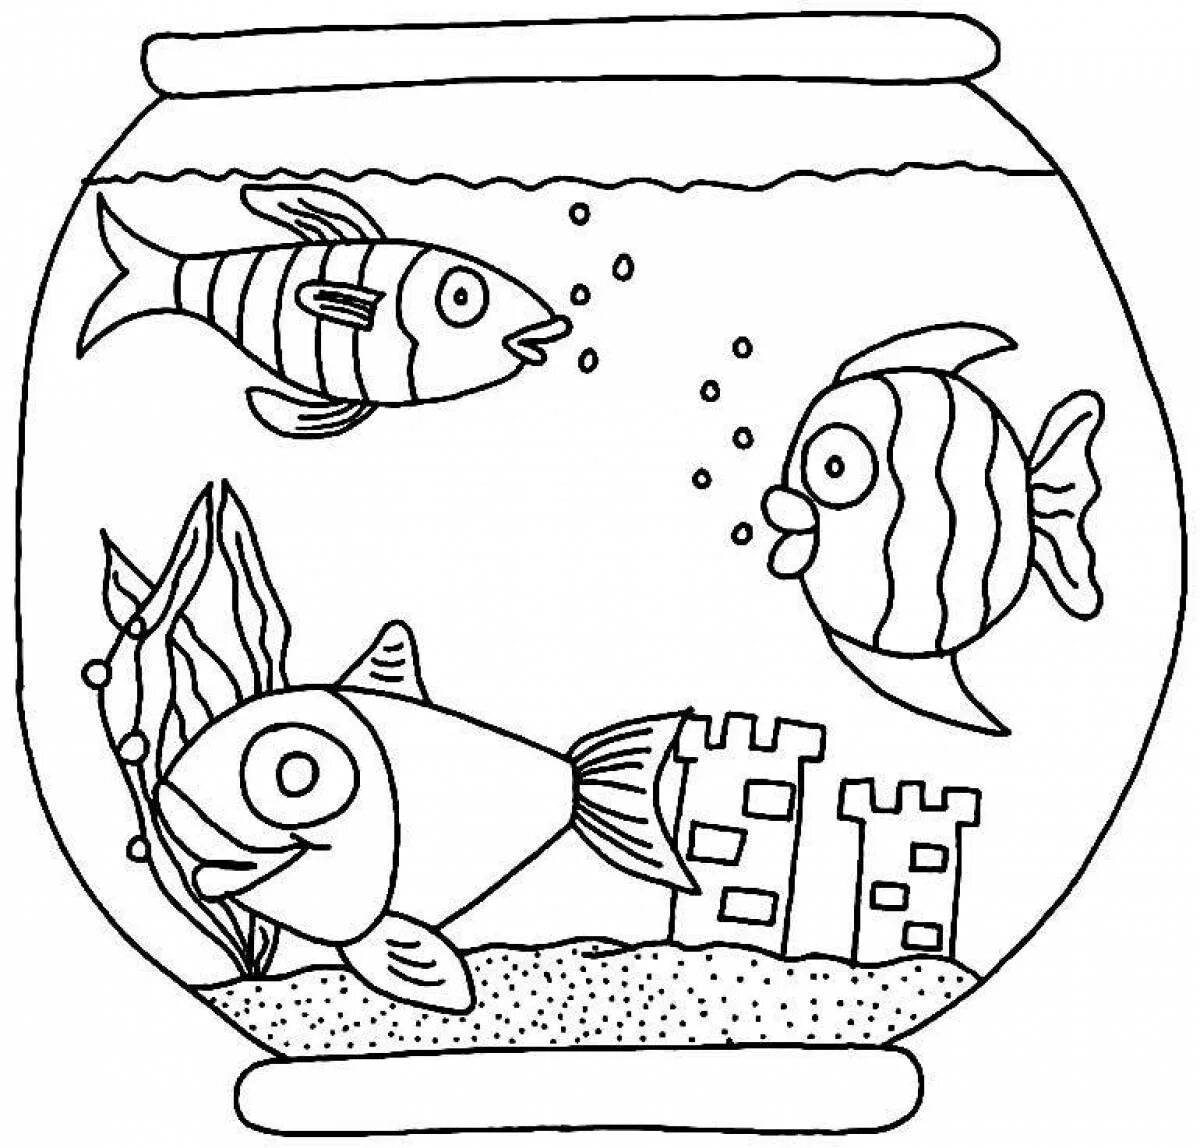 Рисования рыбки плавают в аквариуме. Раскраска аквариум с рыбками. Аквариумные рыбки раскраска для детей. Раскраска аквариум с рыбками для детей. Рыбы в аквариуме раскраска для детей.